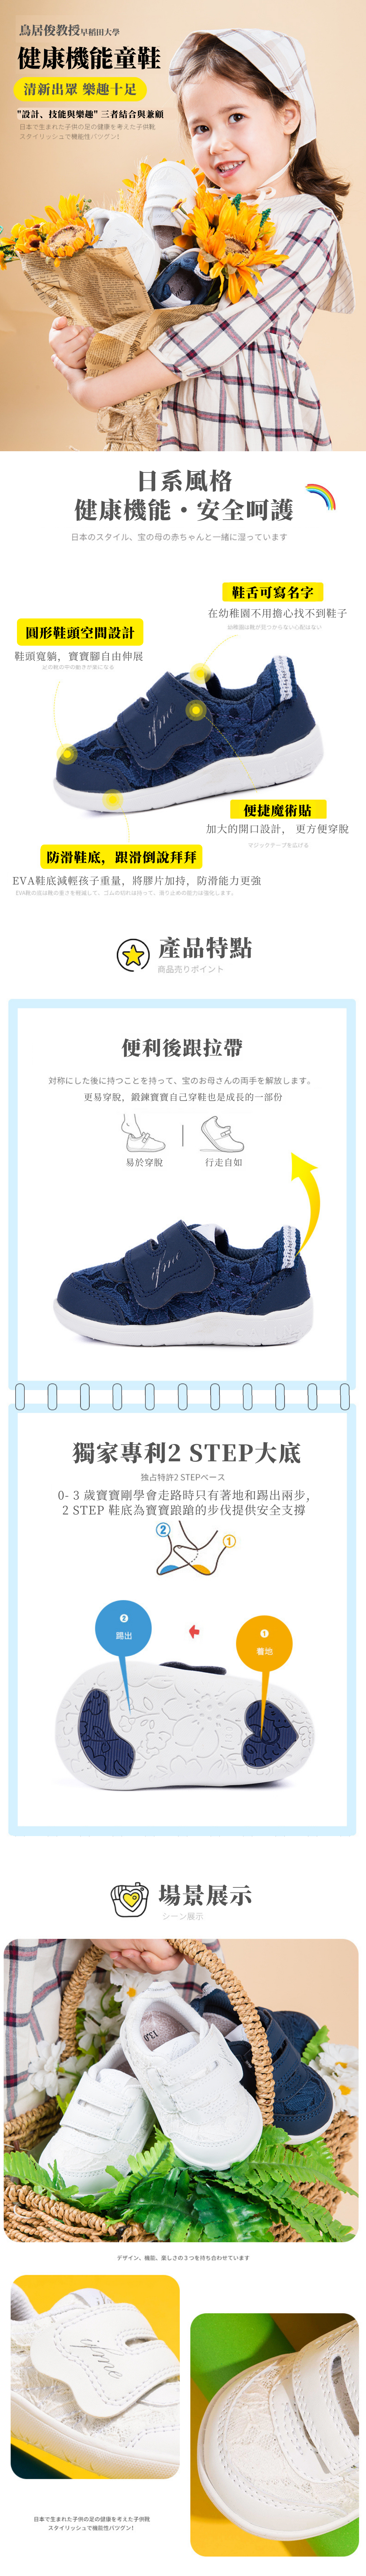 IFME_22-0124 機能學步鞋產品特點